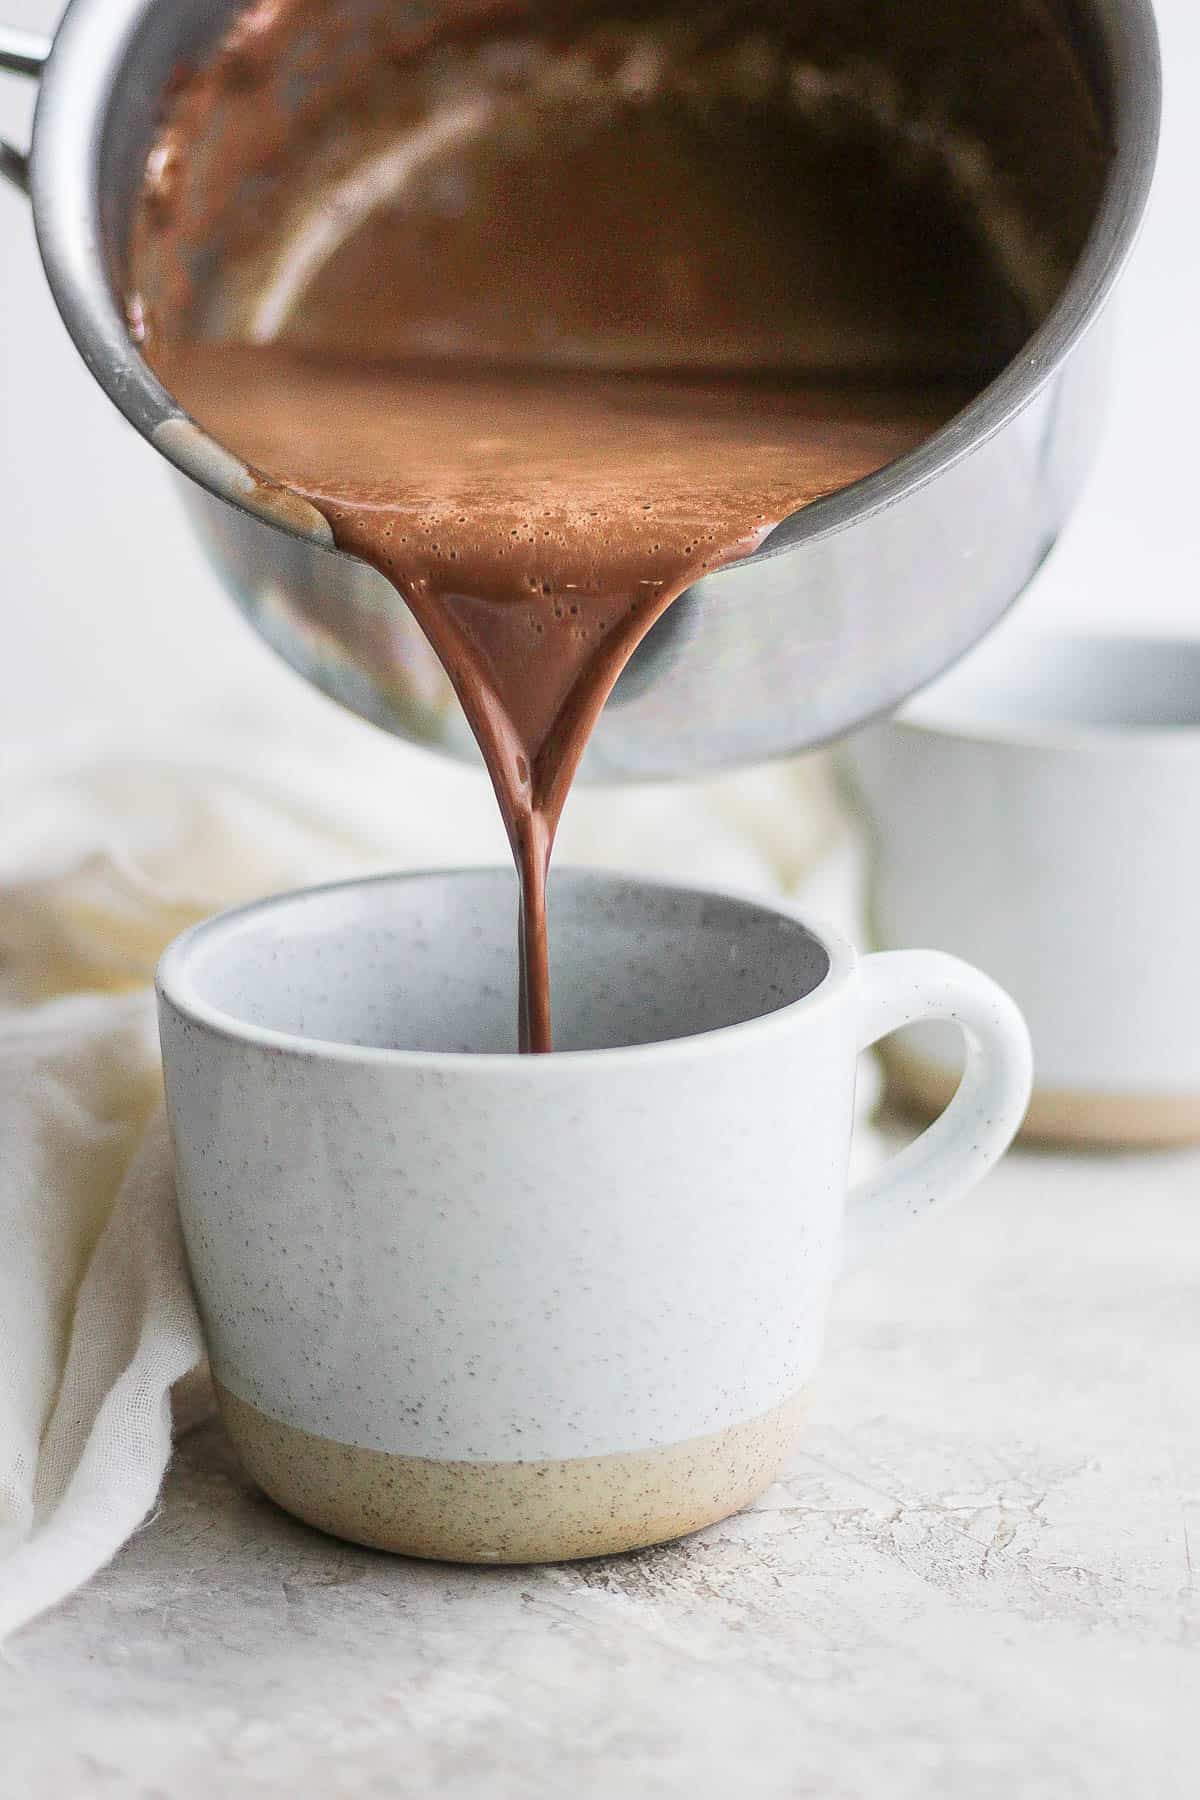 Someone pouring dairy free hot chocolate into mug.